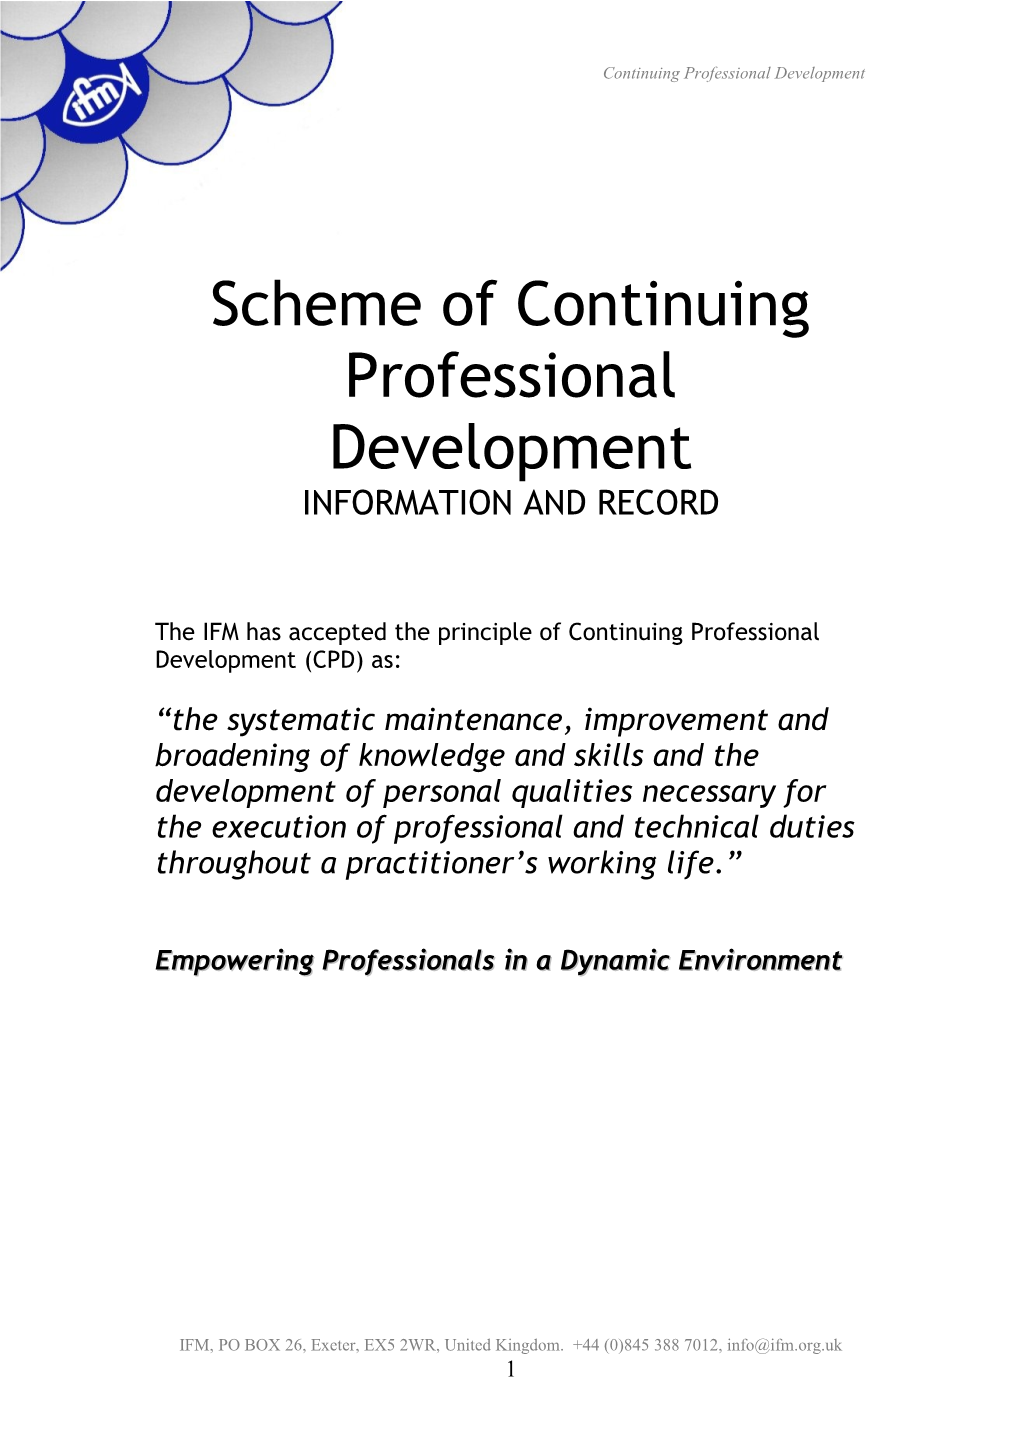 Scheme of Continuing Professional Development